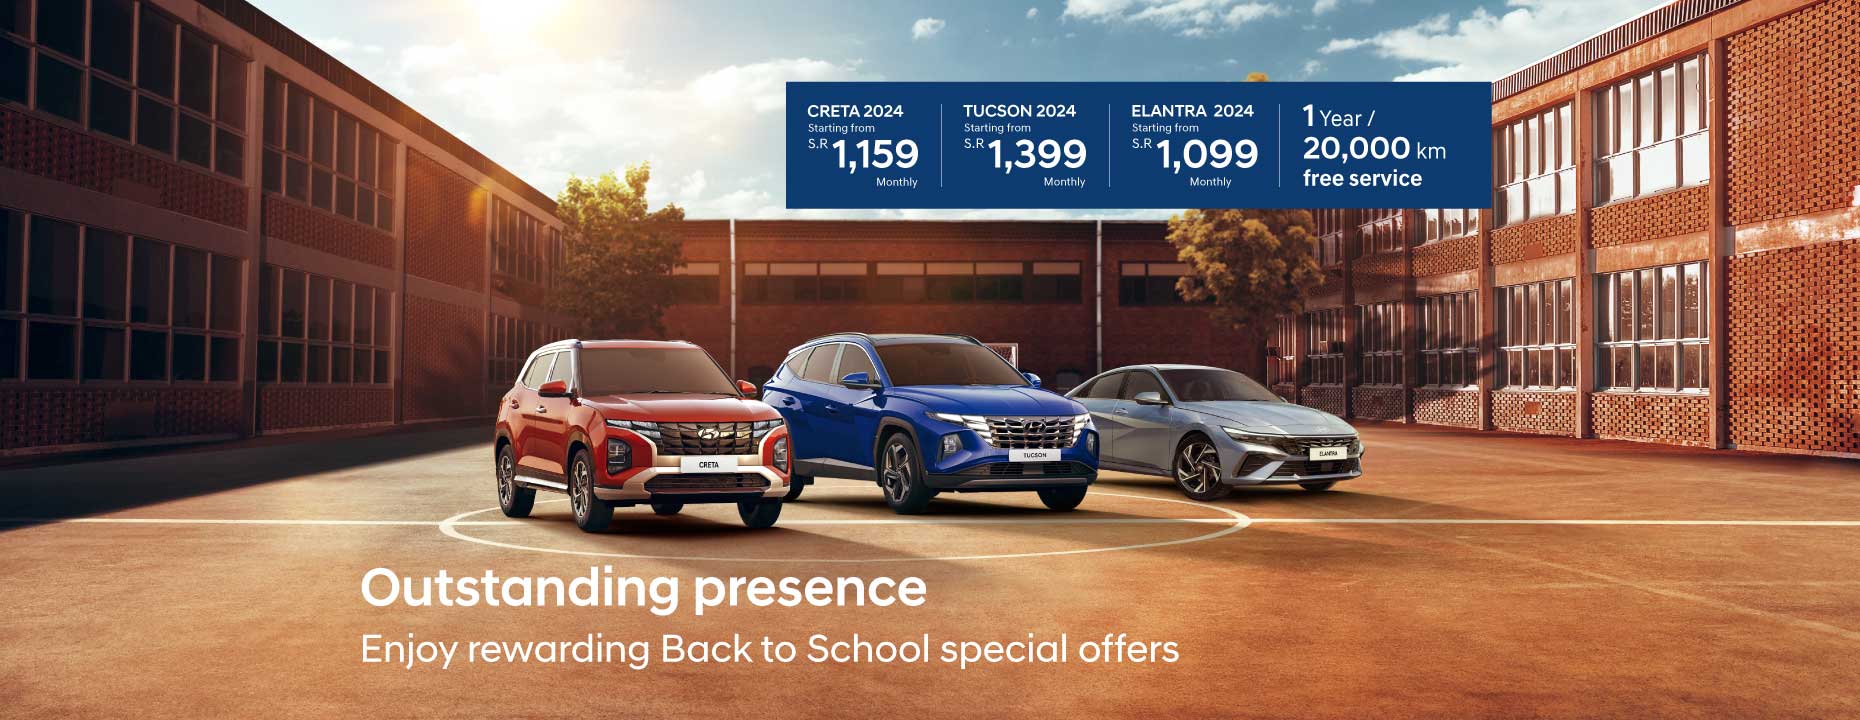 Hyundai Promotional Offers